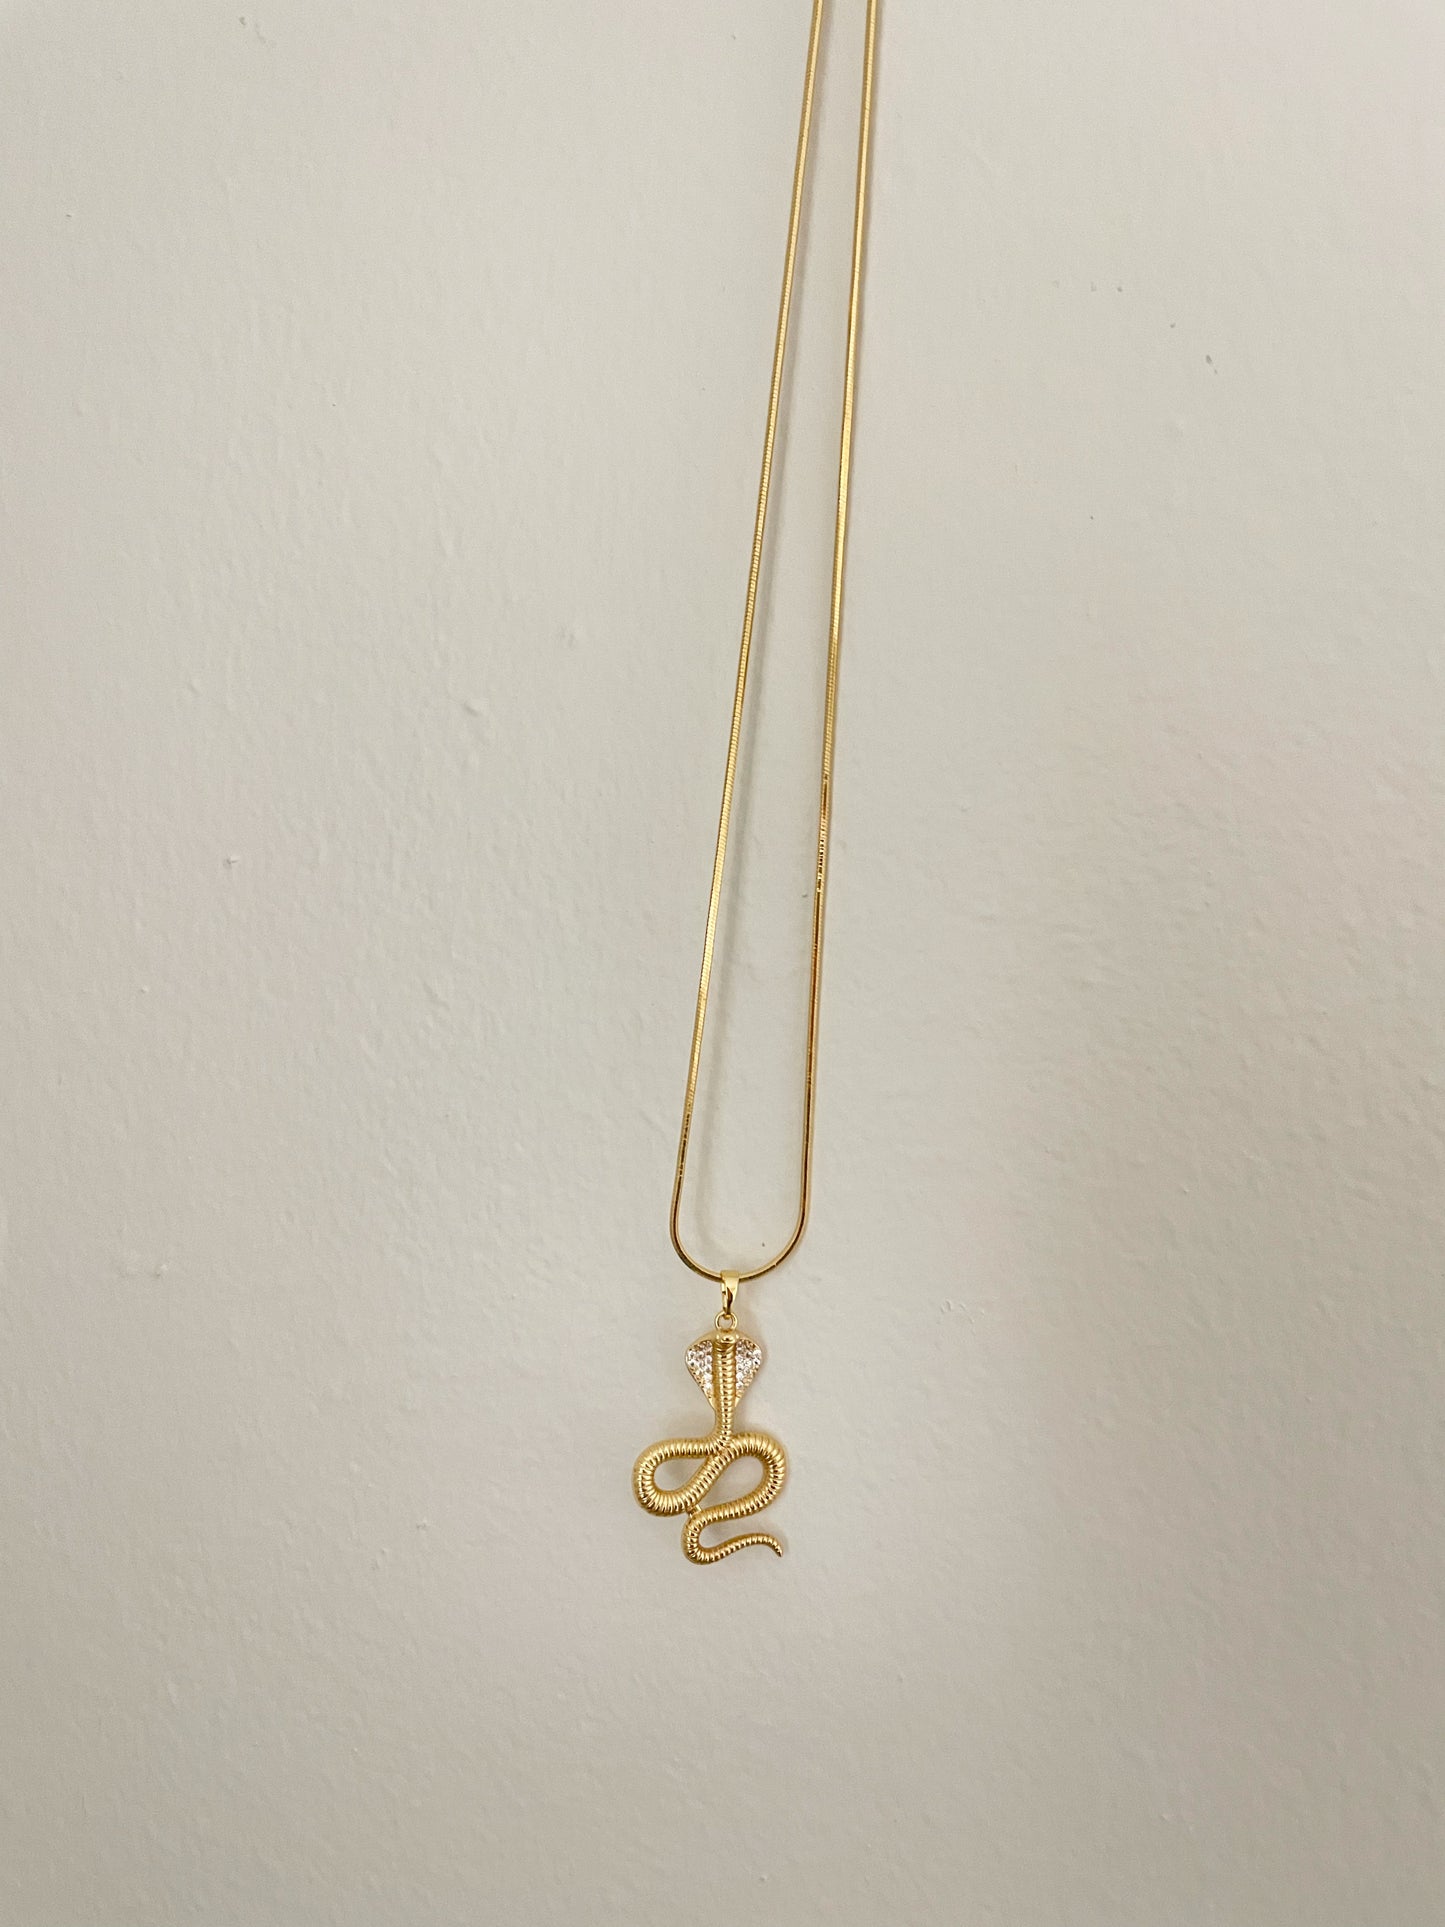 Snake Charmer Gold Necklace. Gold Filled